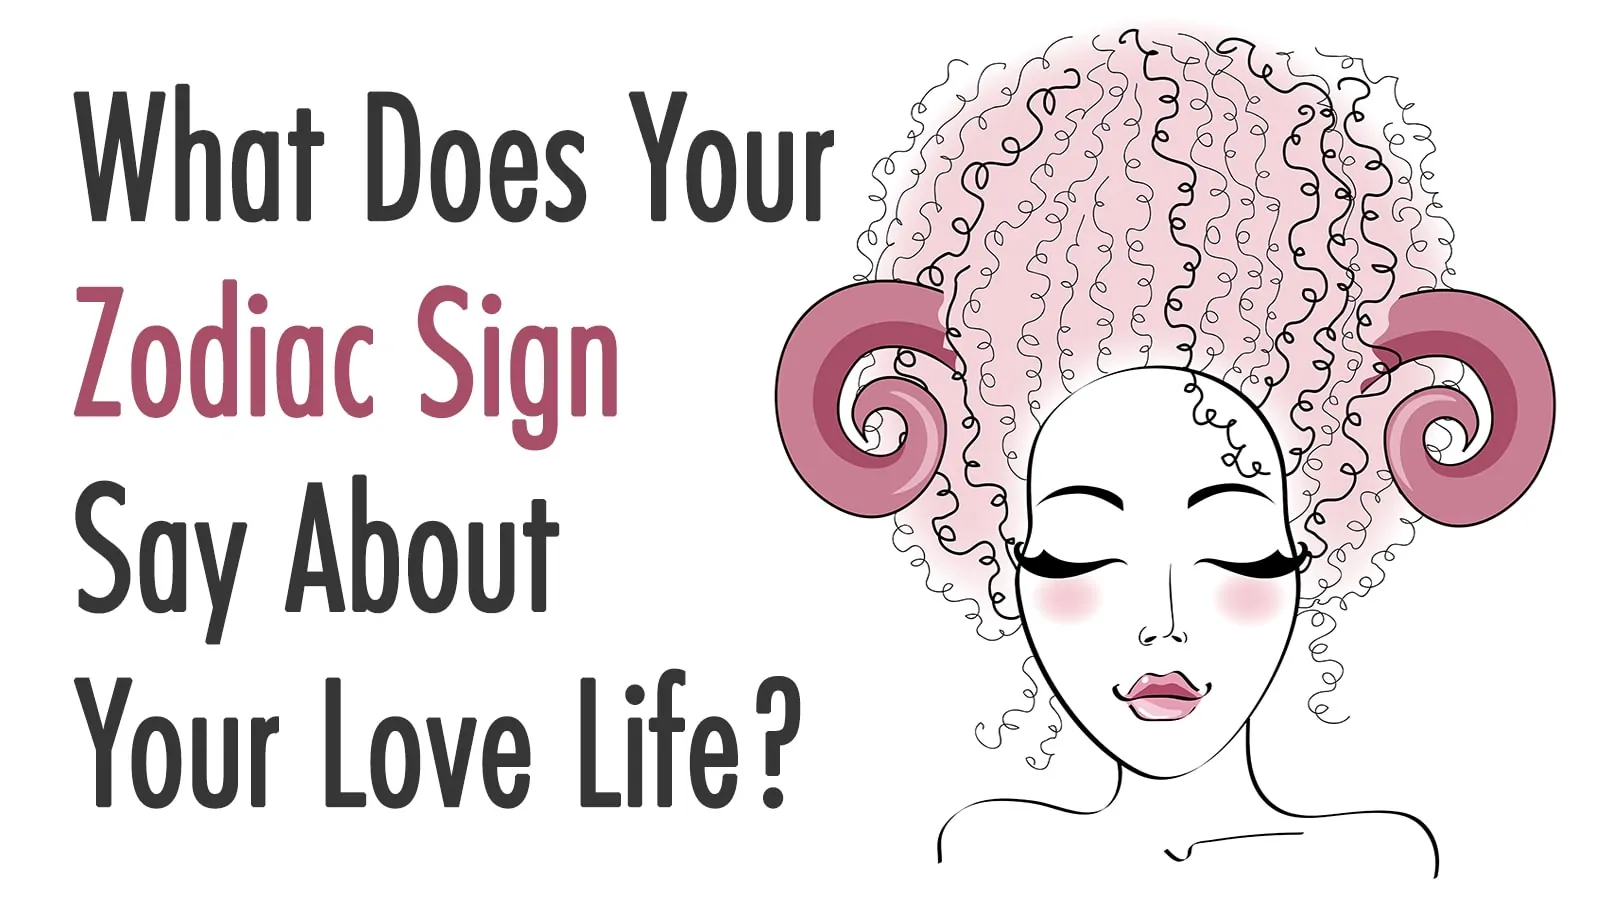 Love horoscope signs the Love Horoscope